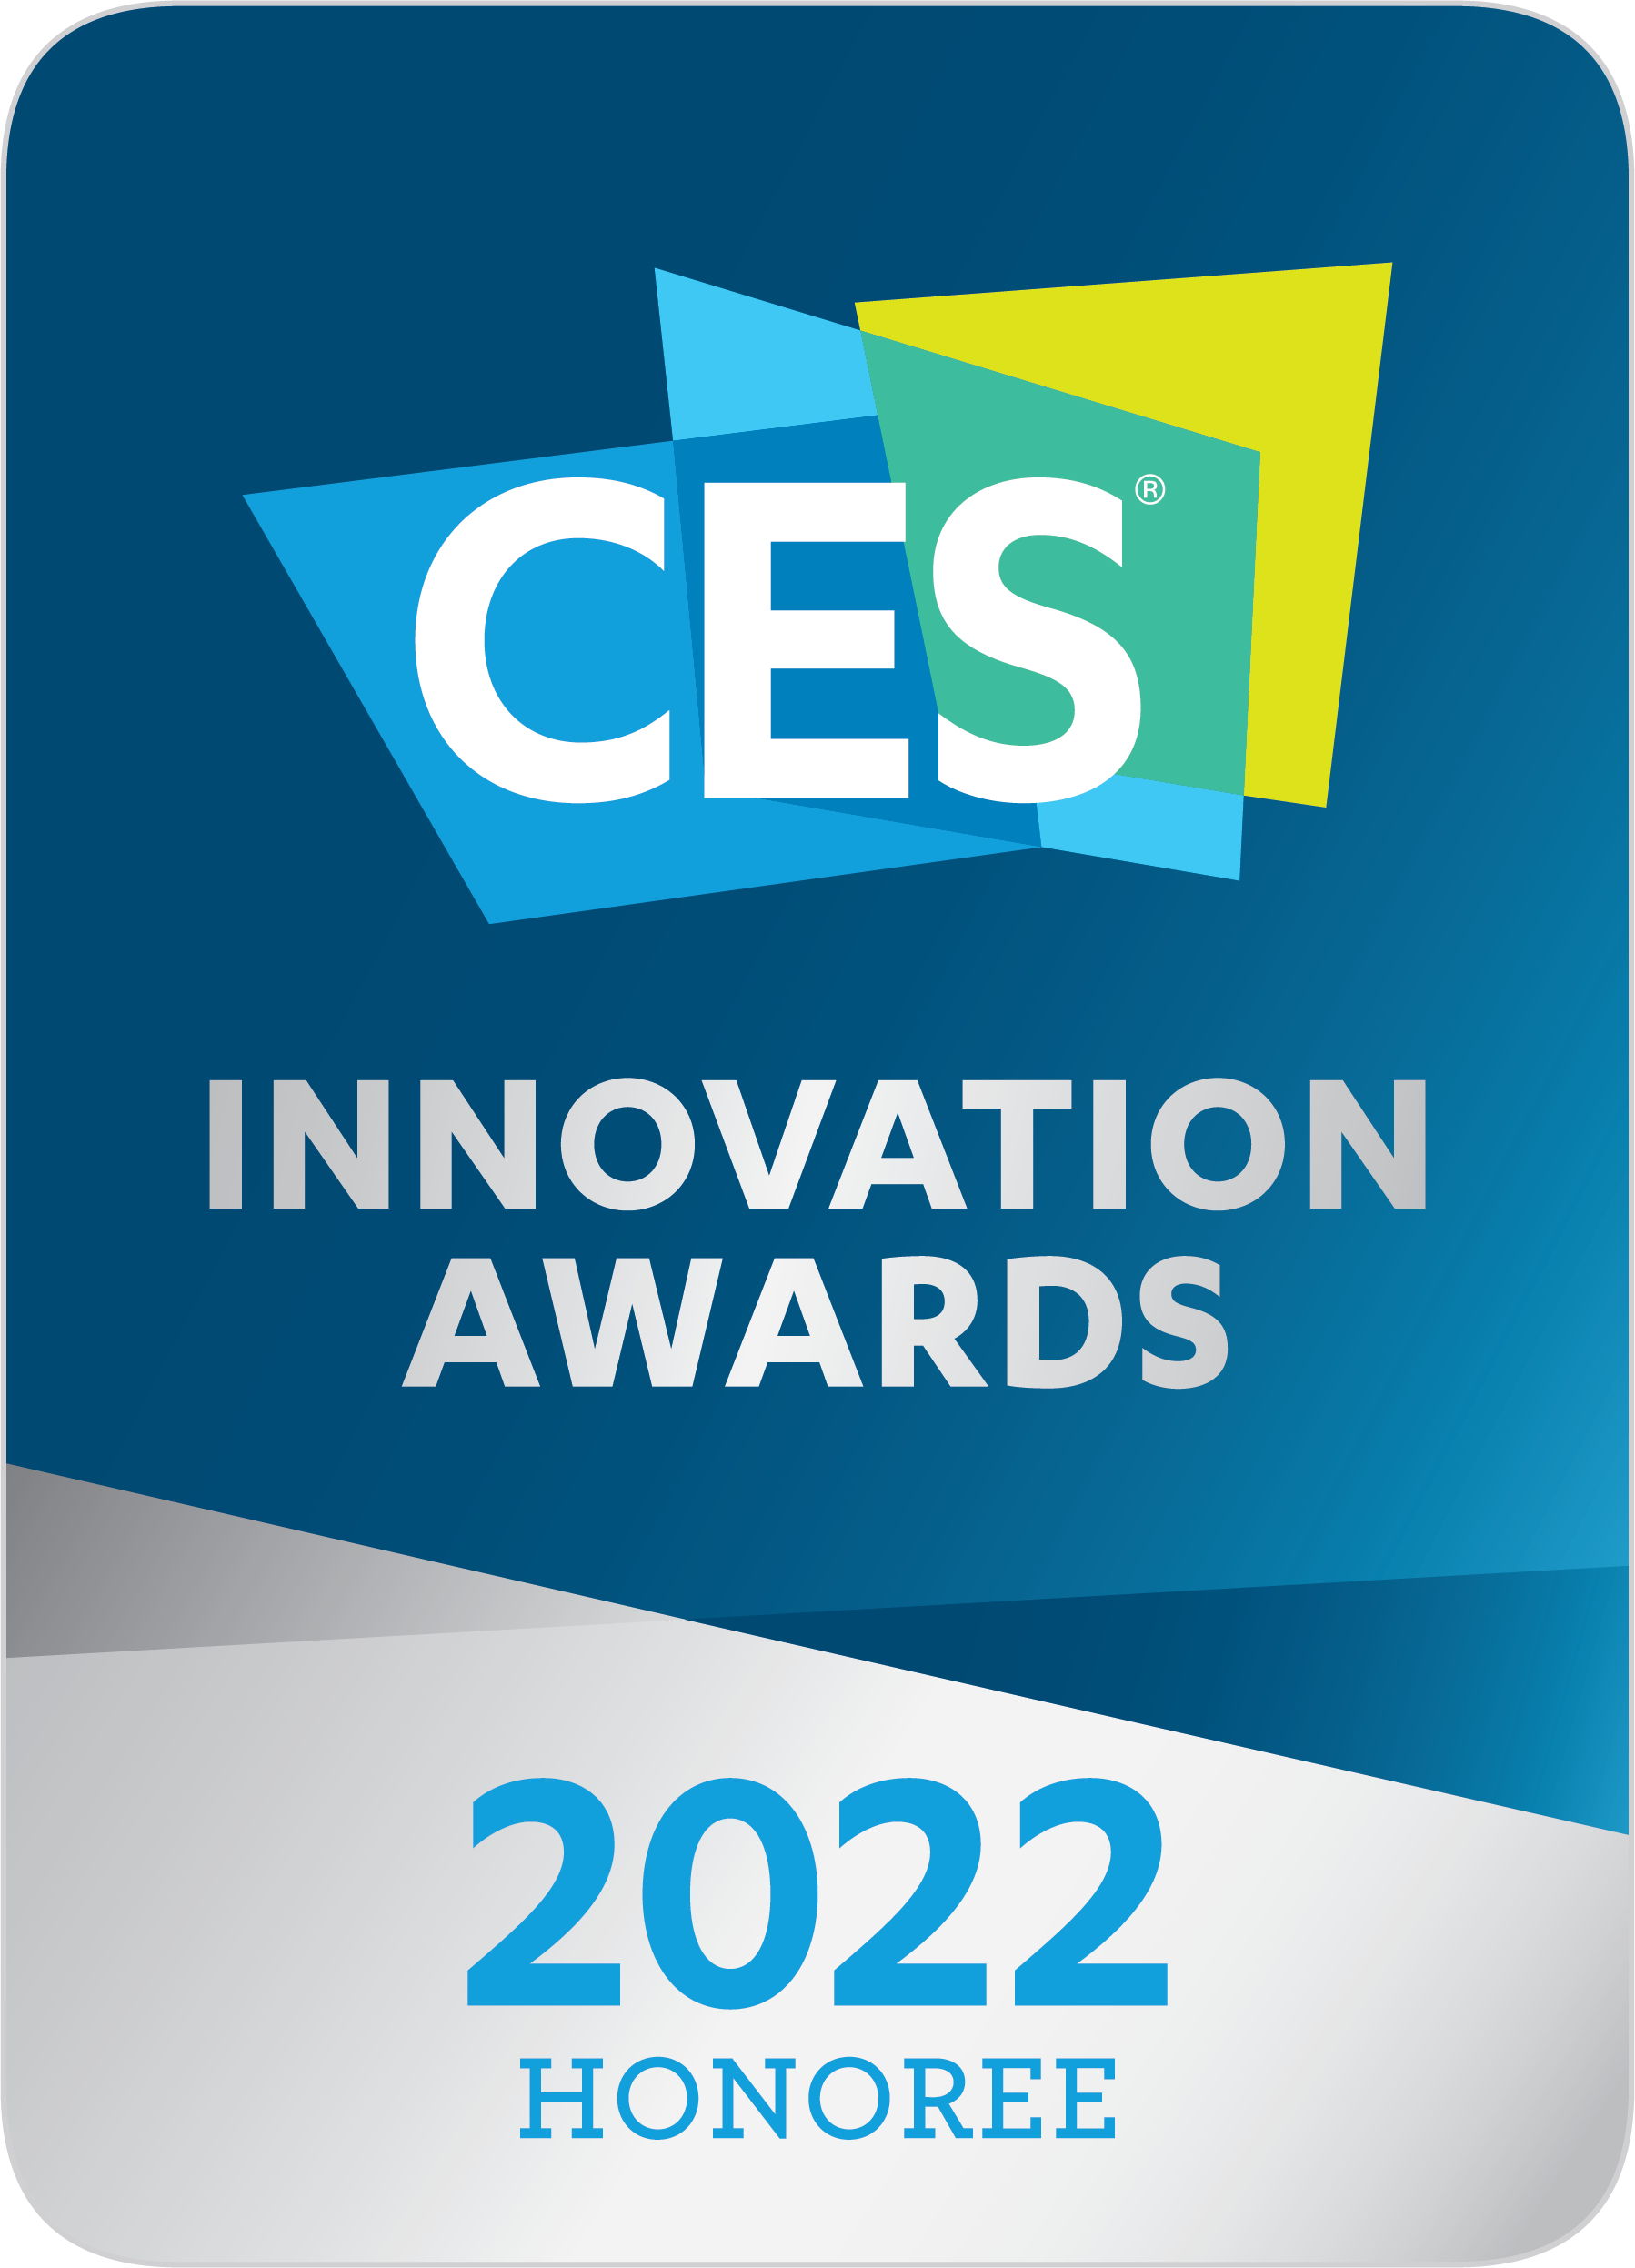 CES 2022 Innovation Awards